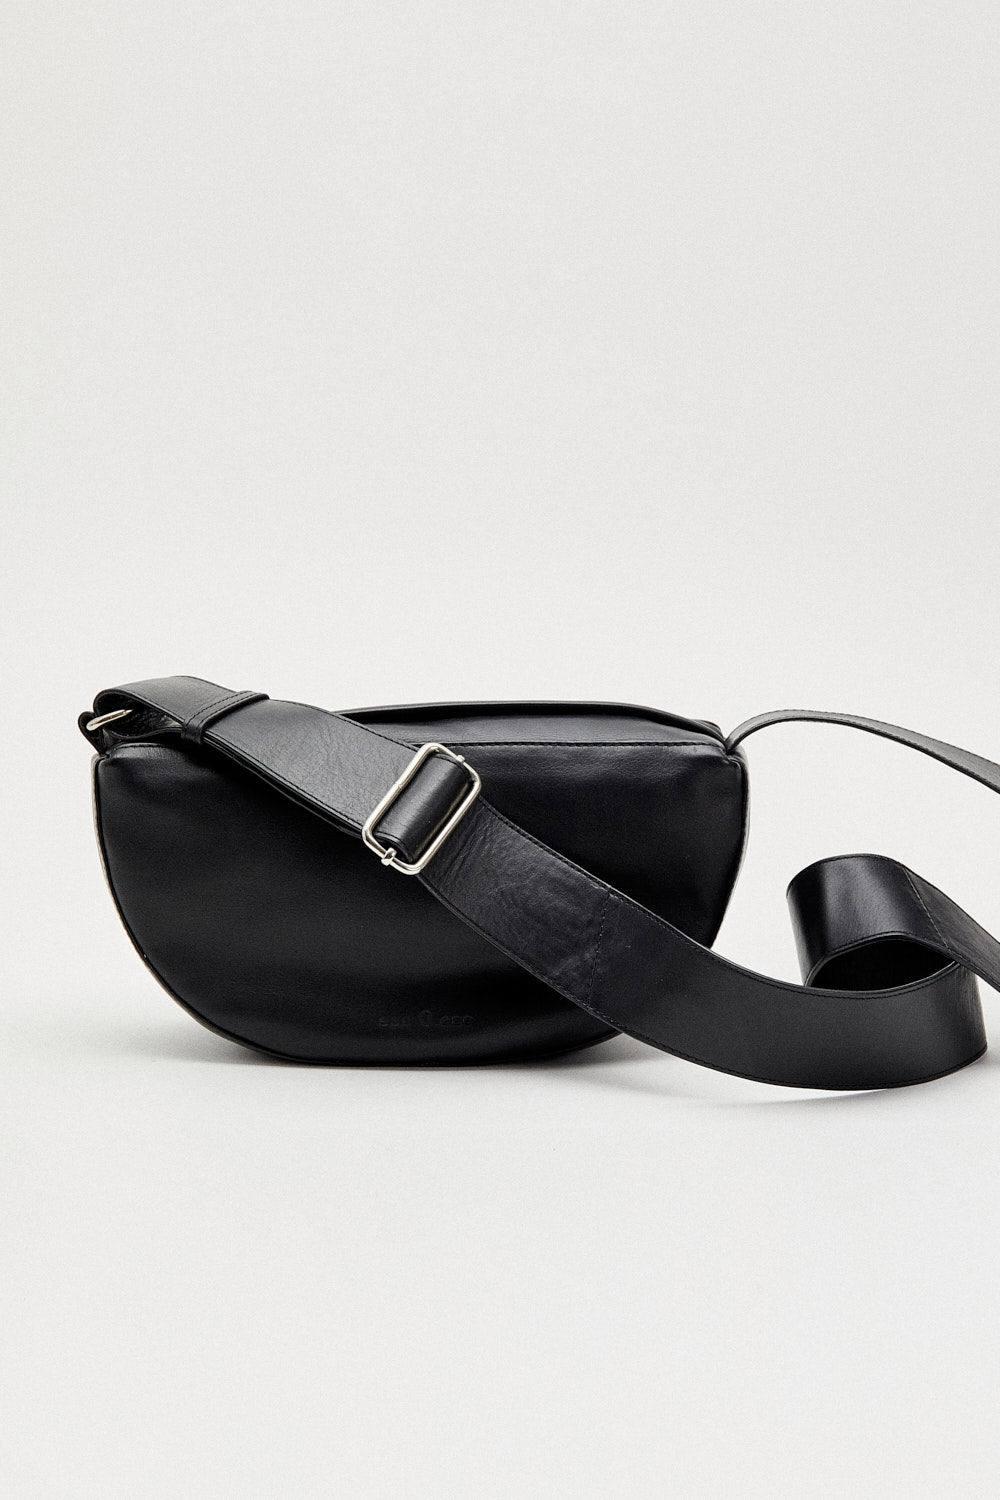 Black Leather Amsterdam Bag by Ese O Ese